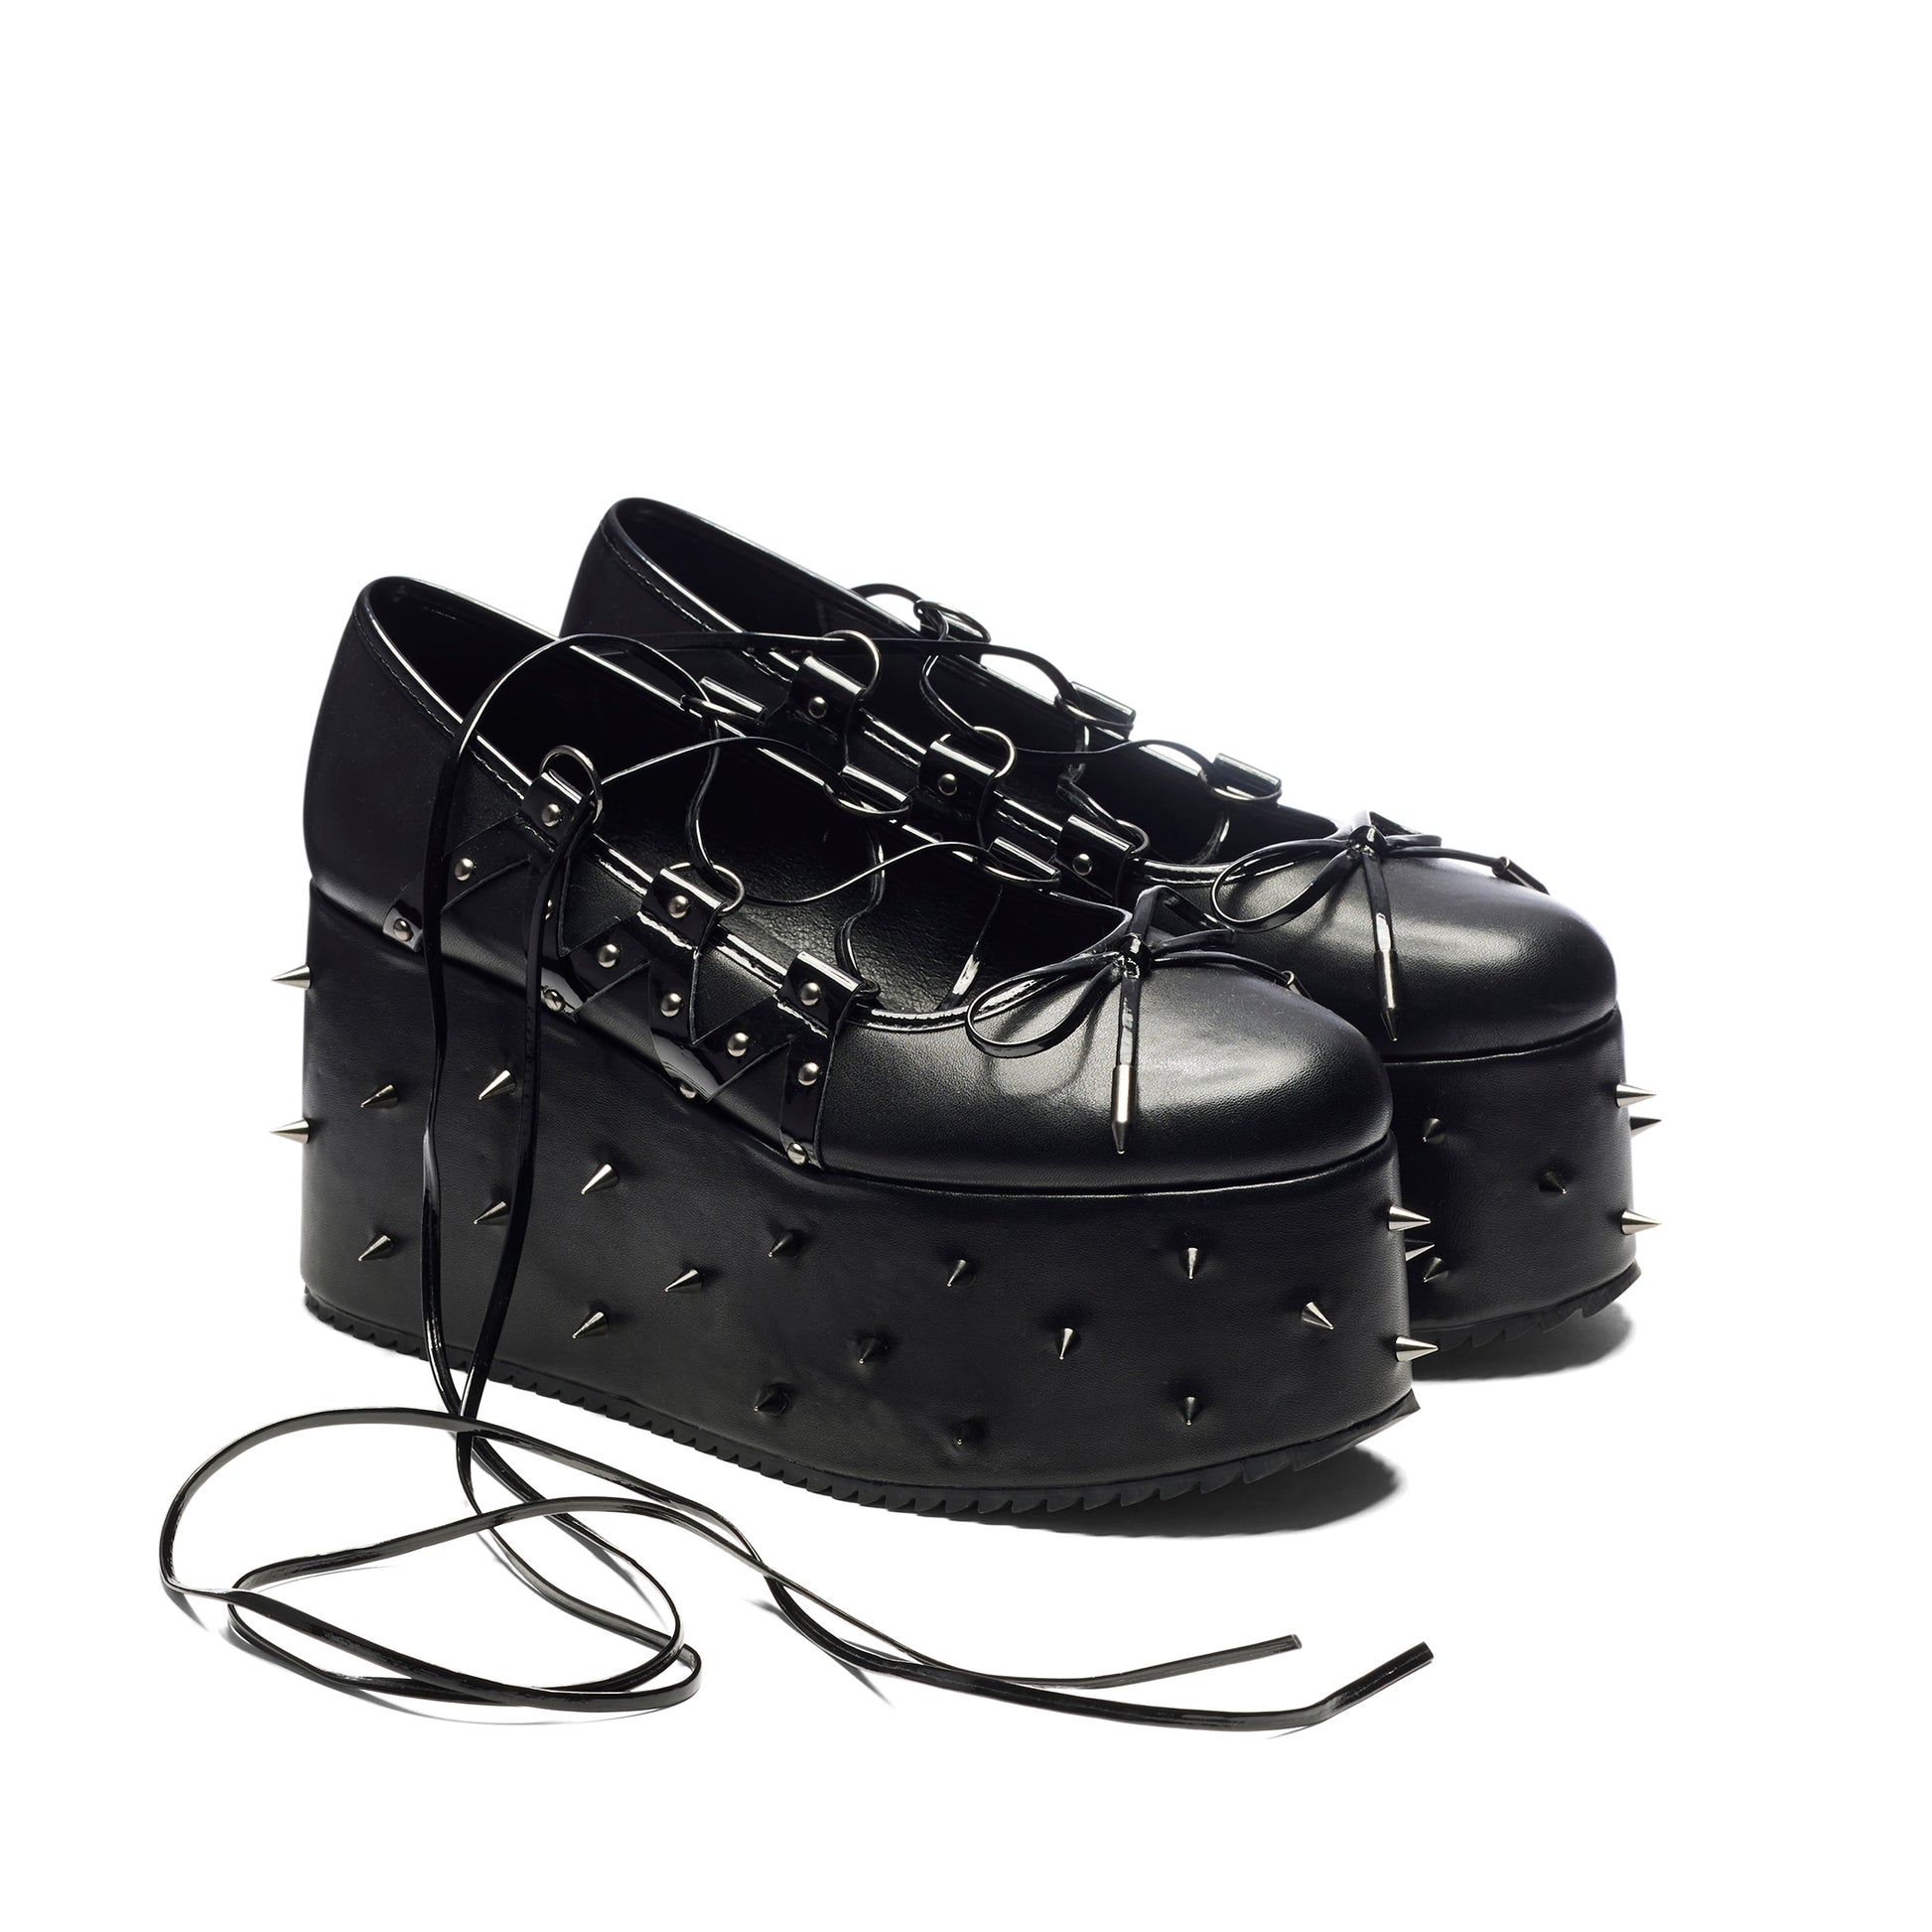 Zorina Lace Up Platform Ballet Shoes - Black - Koi Footwear - Three-Quarters View